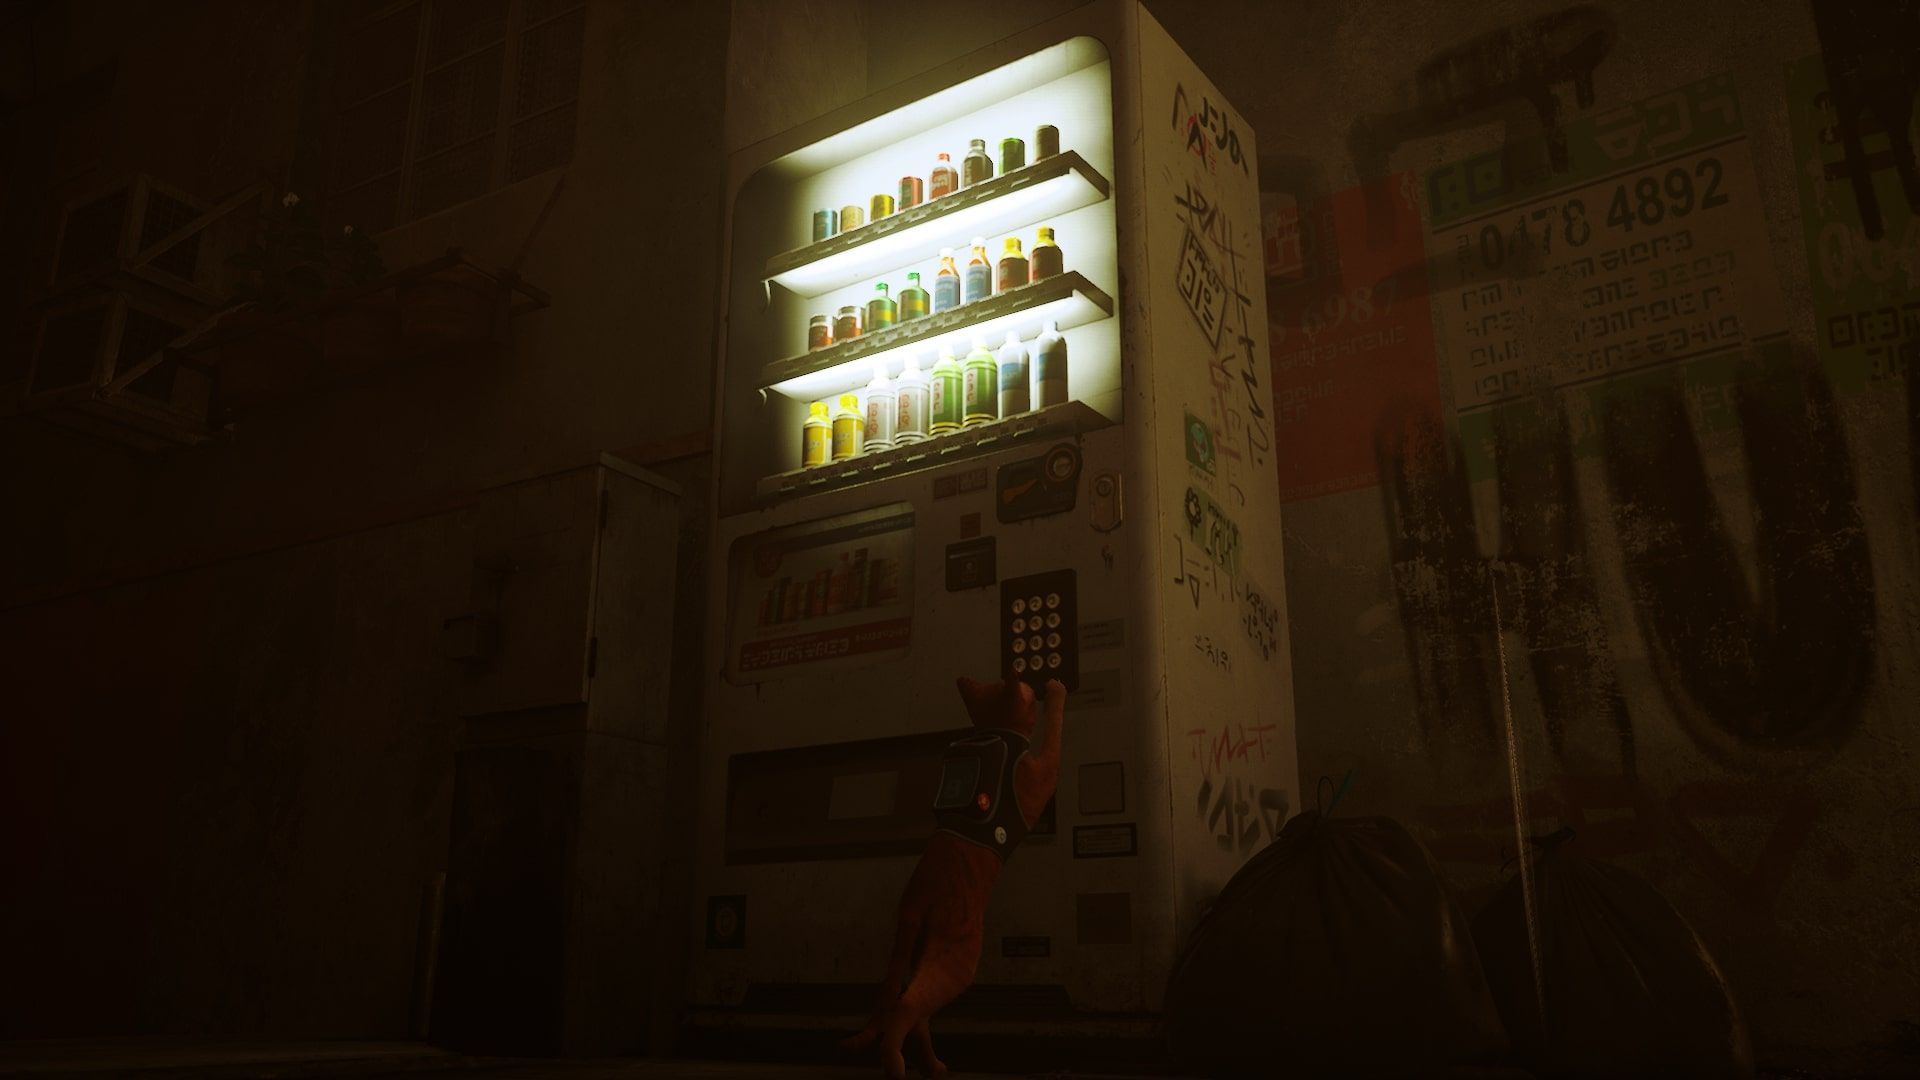 Stray back alley vending machine